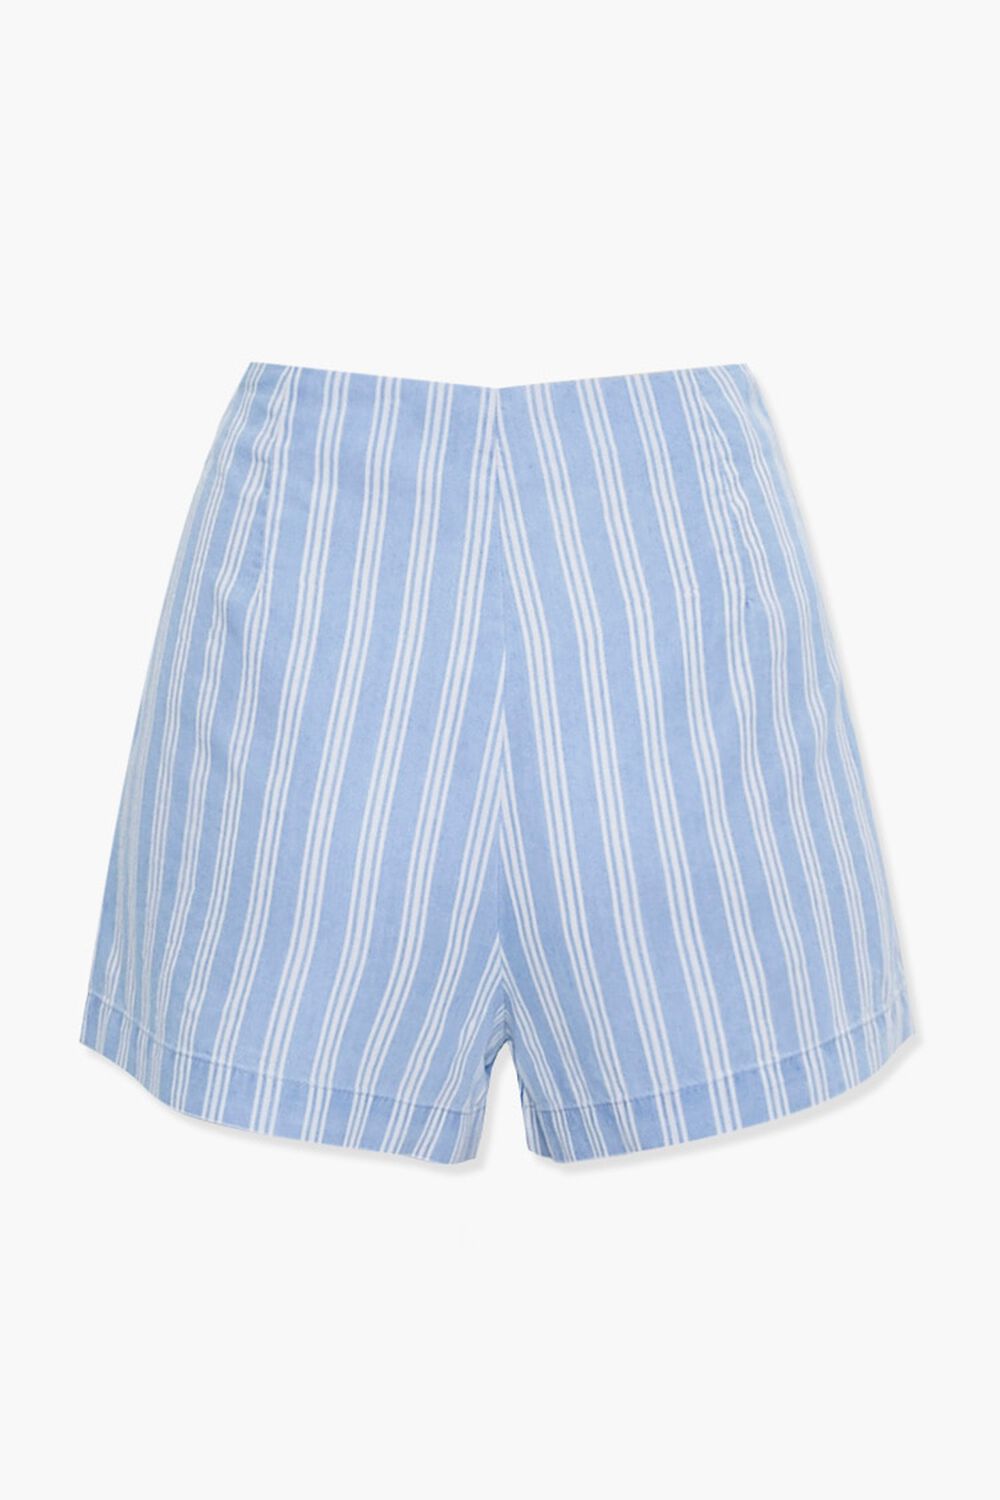 Striped Lace-Up Shorts, image 3